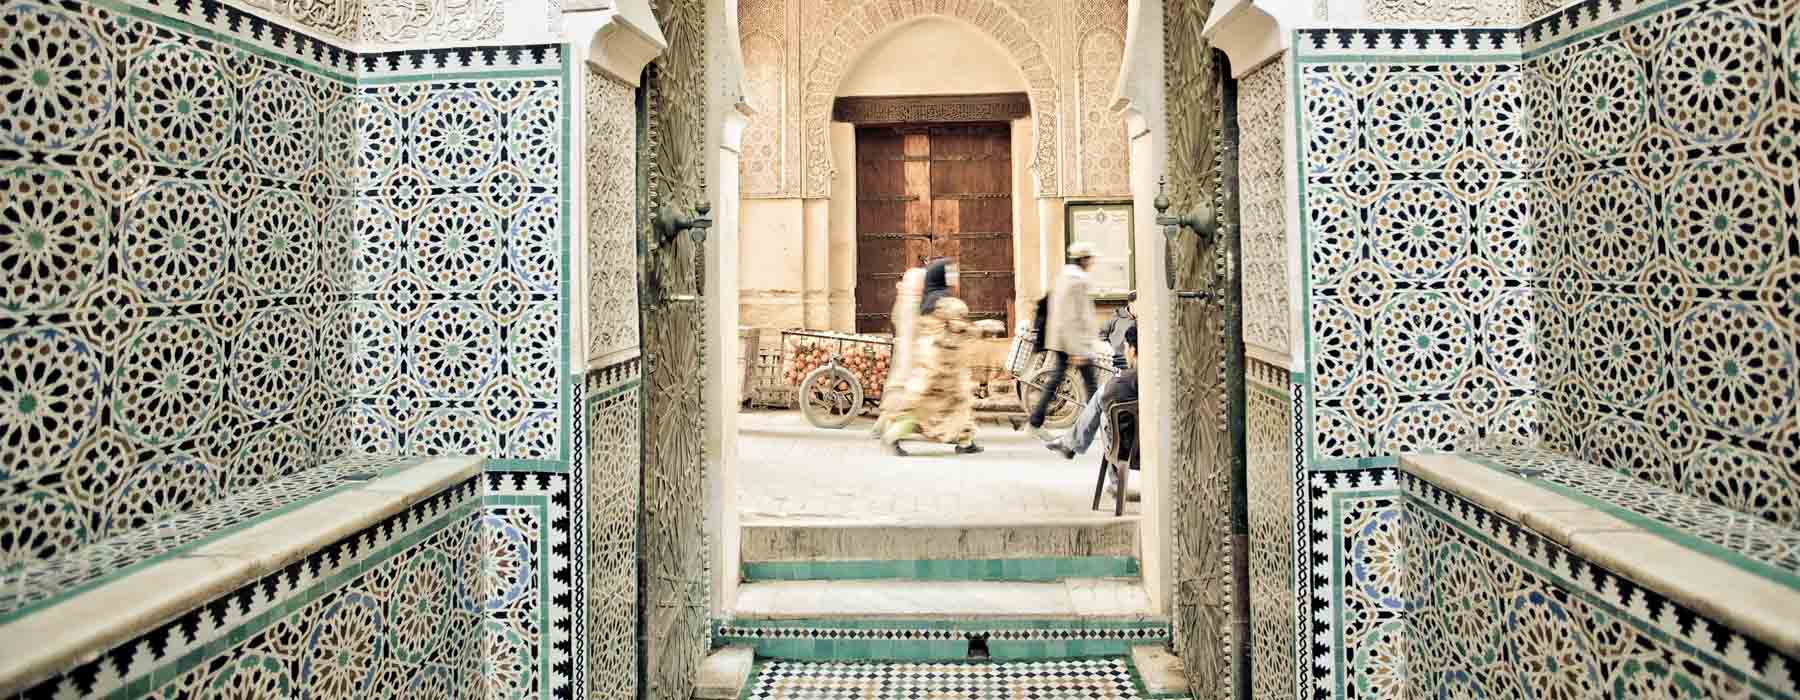 Northern Morocco - Cities & Medinas<br class="hidden-md hidden-lg" /> Holidays